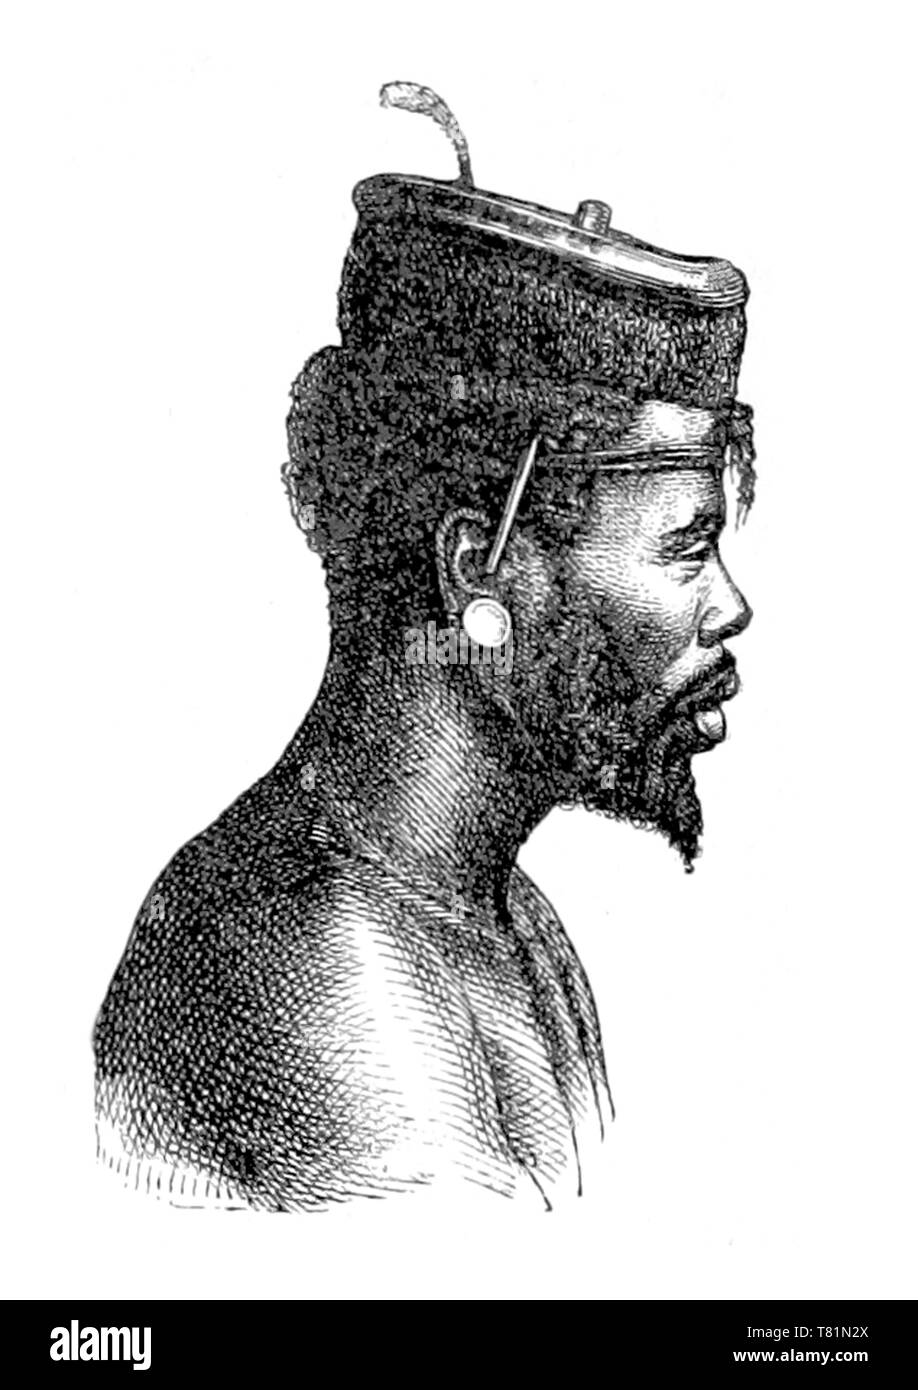 South Africa, Zulu Man with Earplug, 19th Century Stock Photo